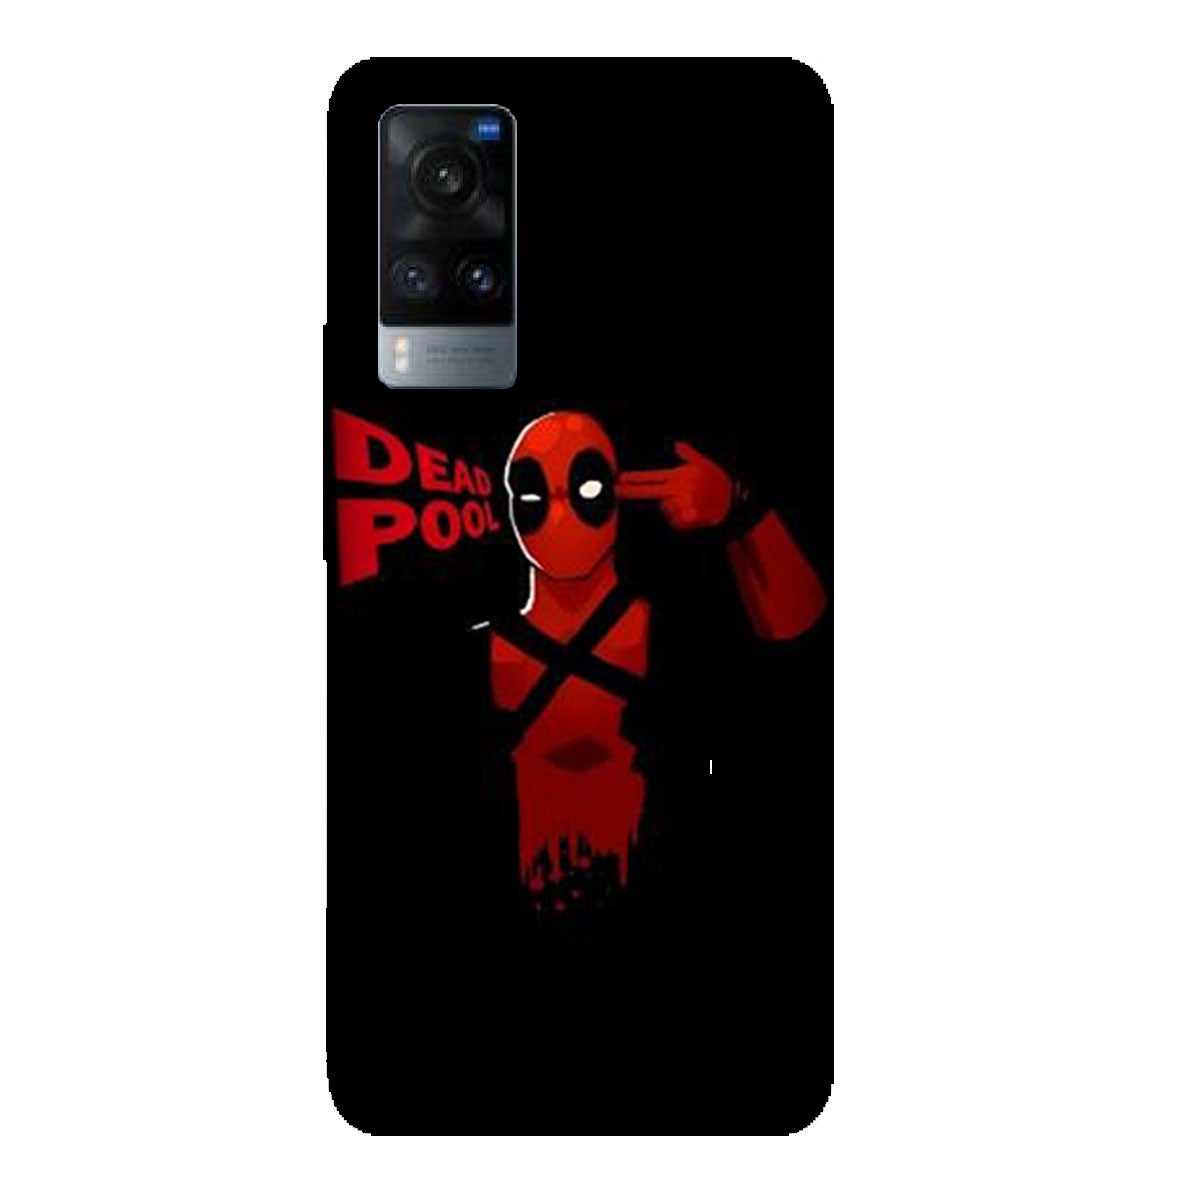 Deadpool - Mobile Phone Cover - Hard Case - Vivo